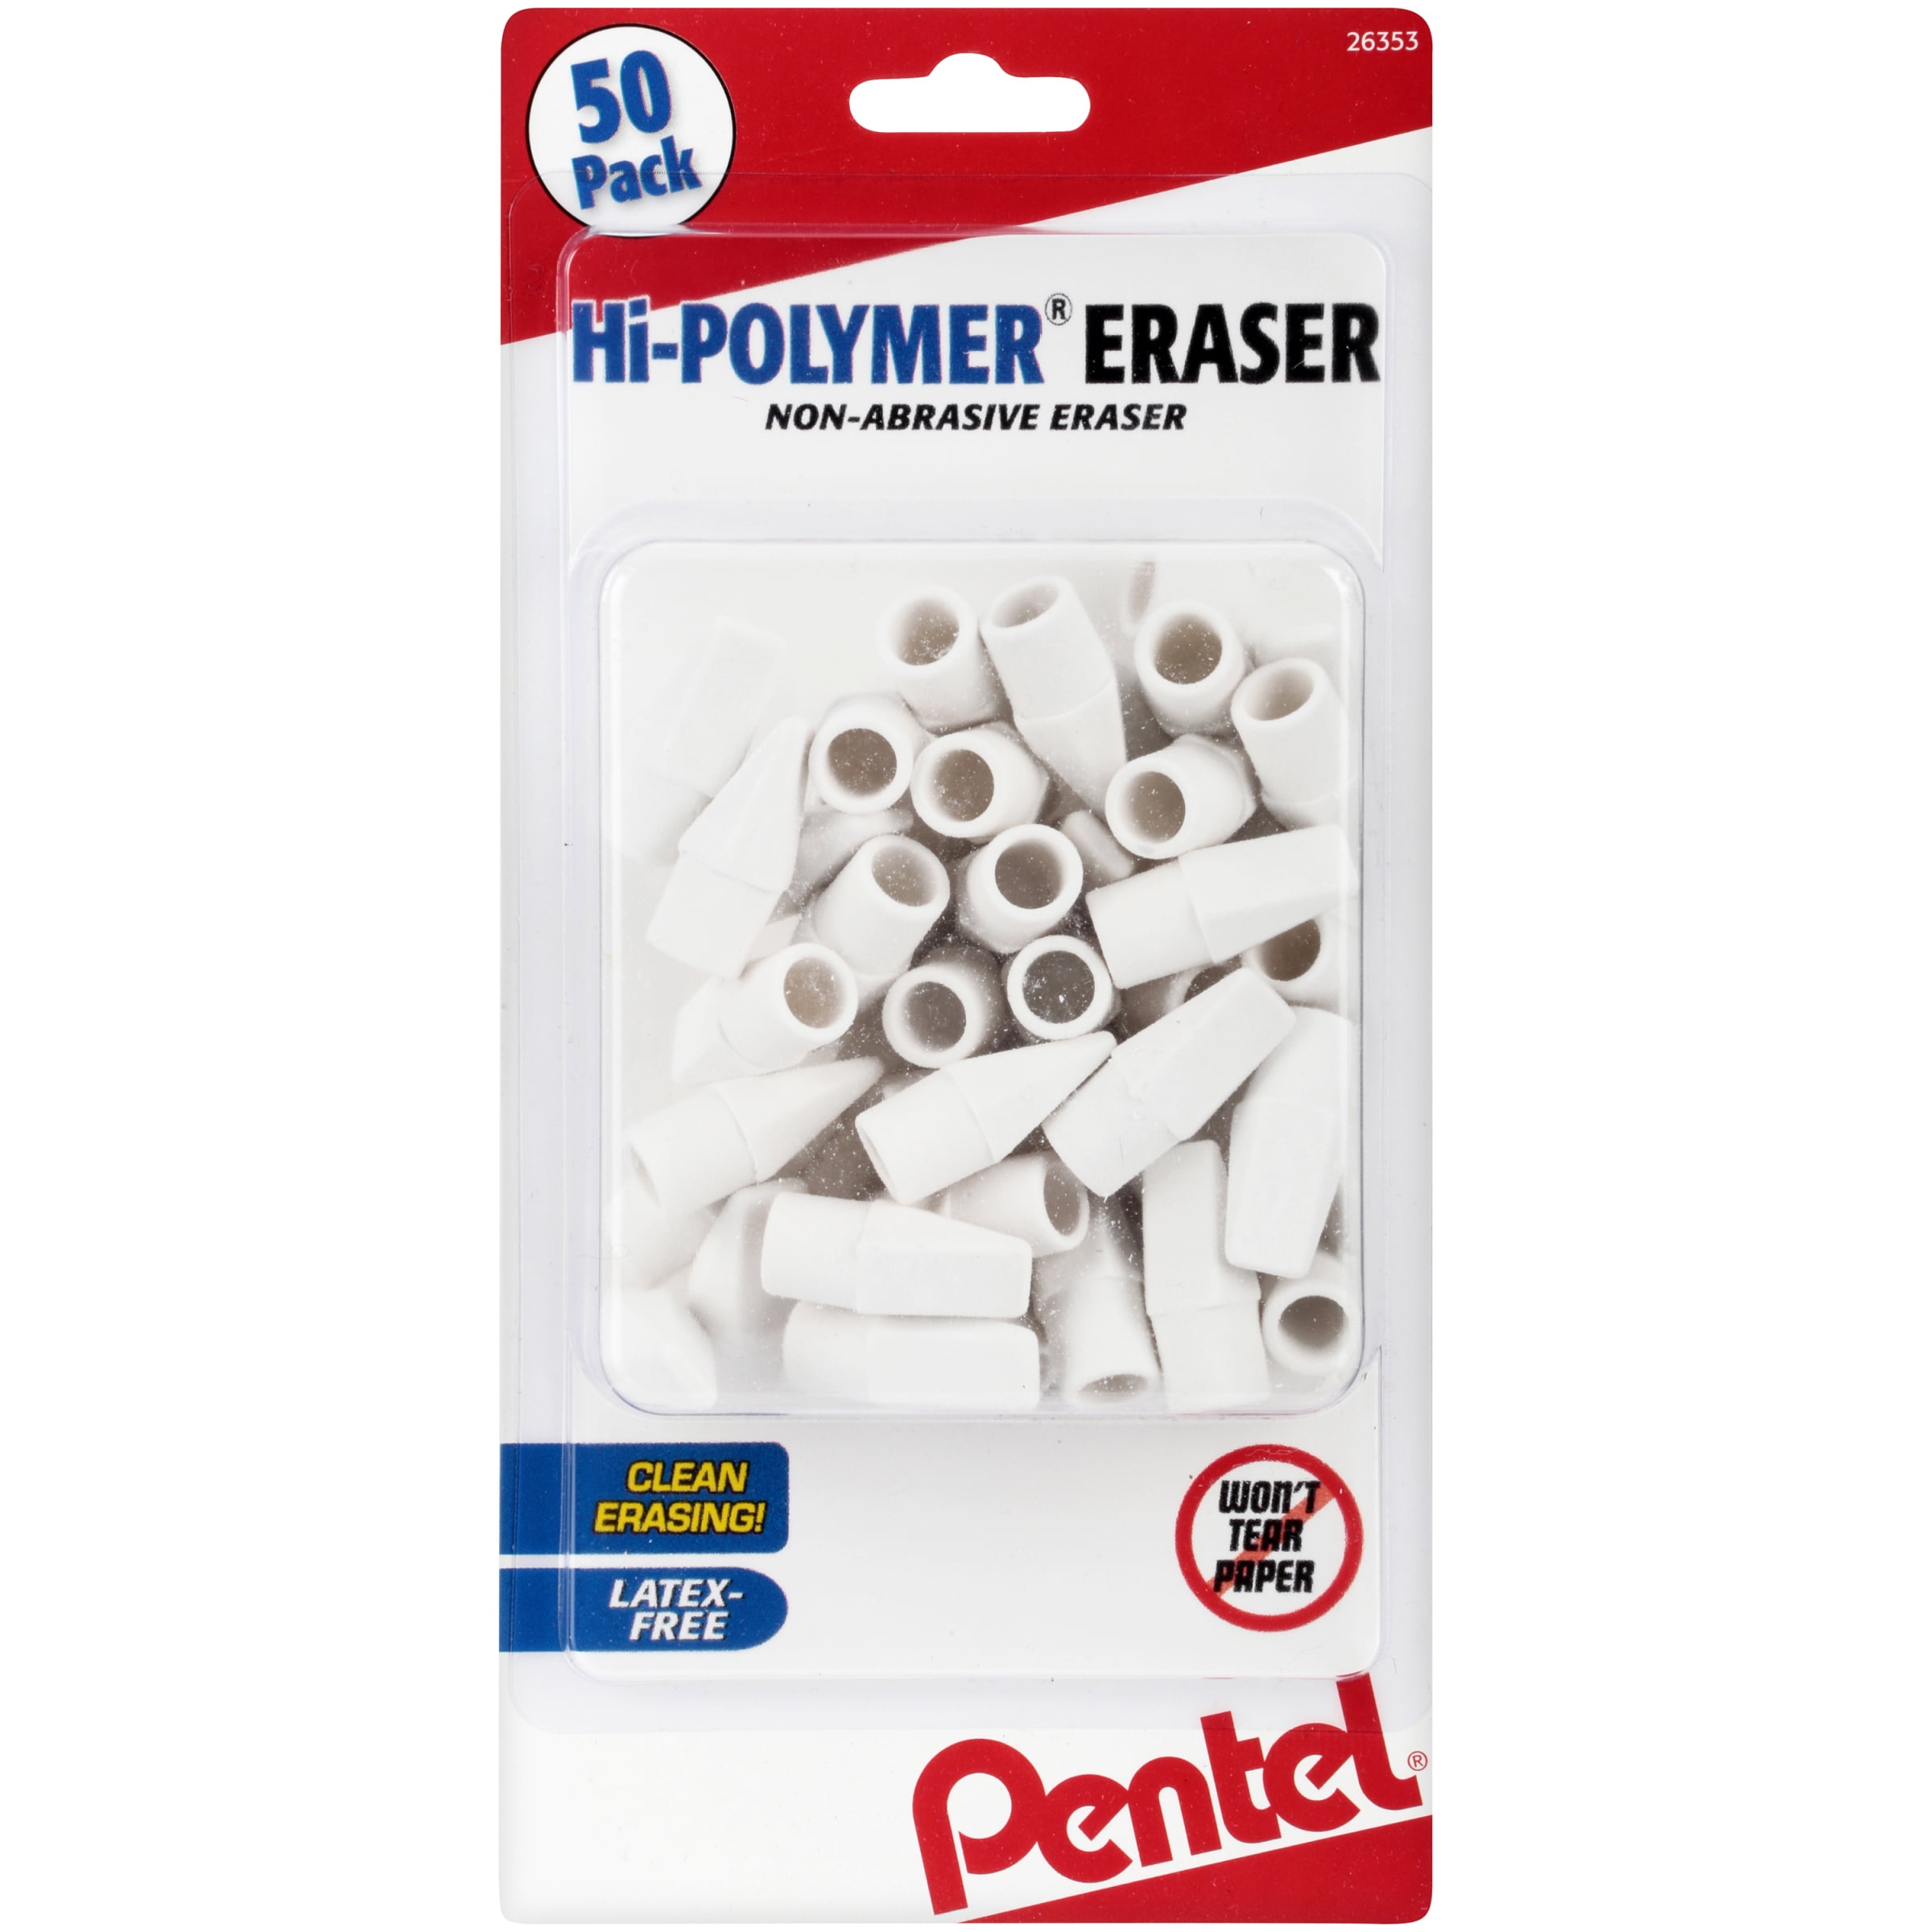 Pentel 6pk Erasers And Caps White : Target